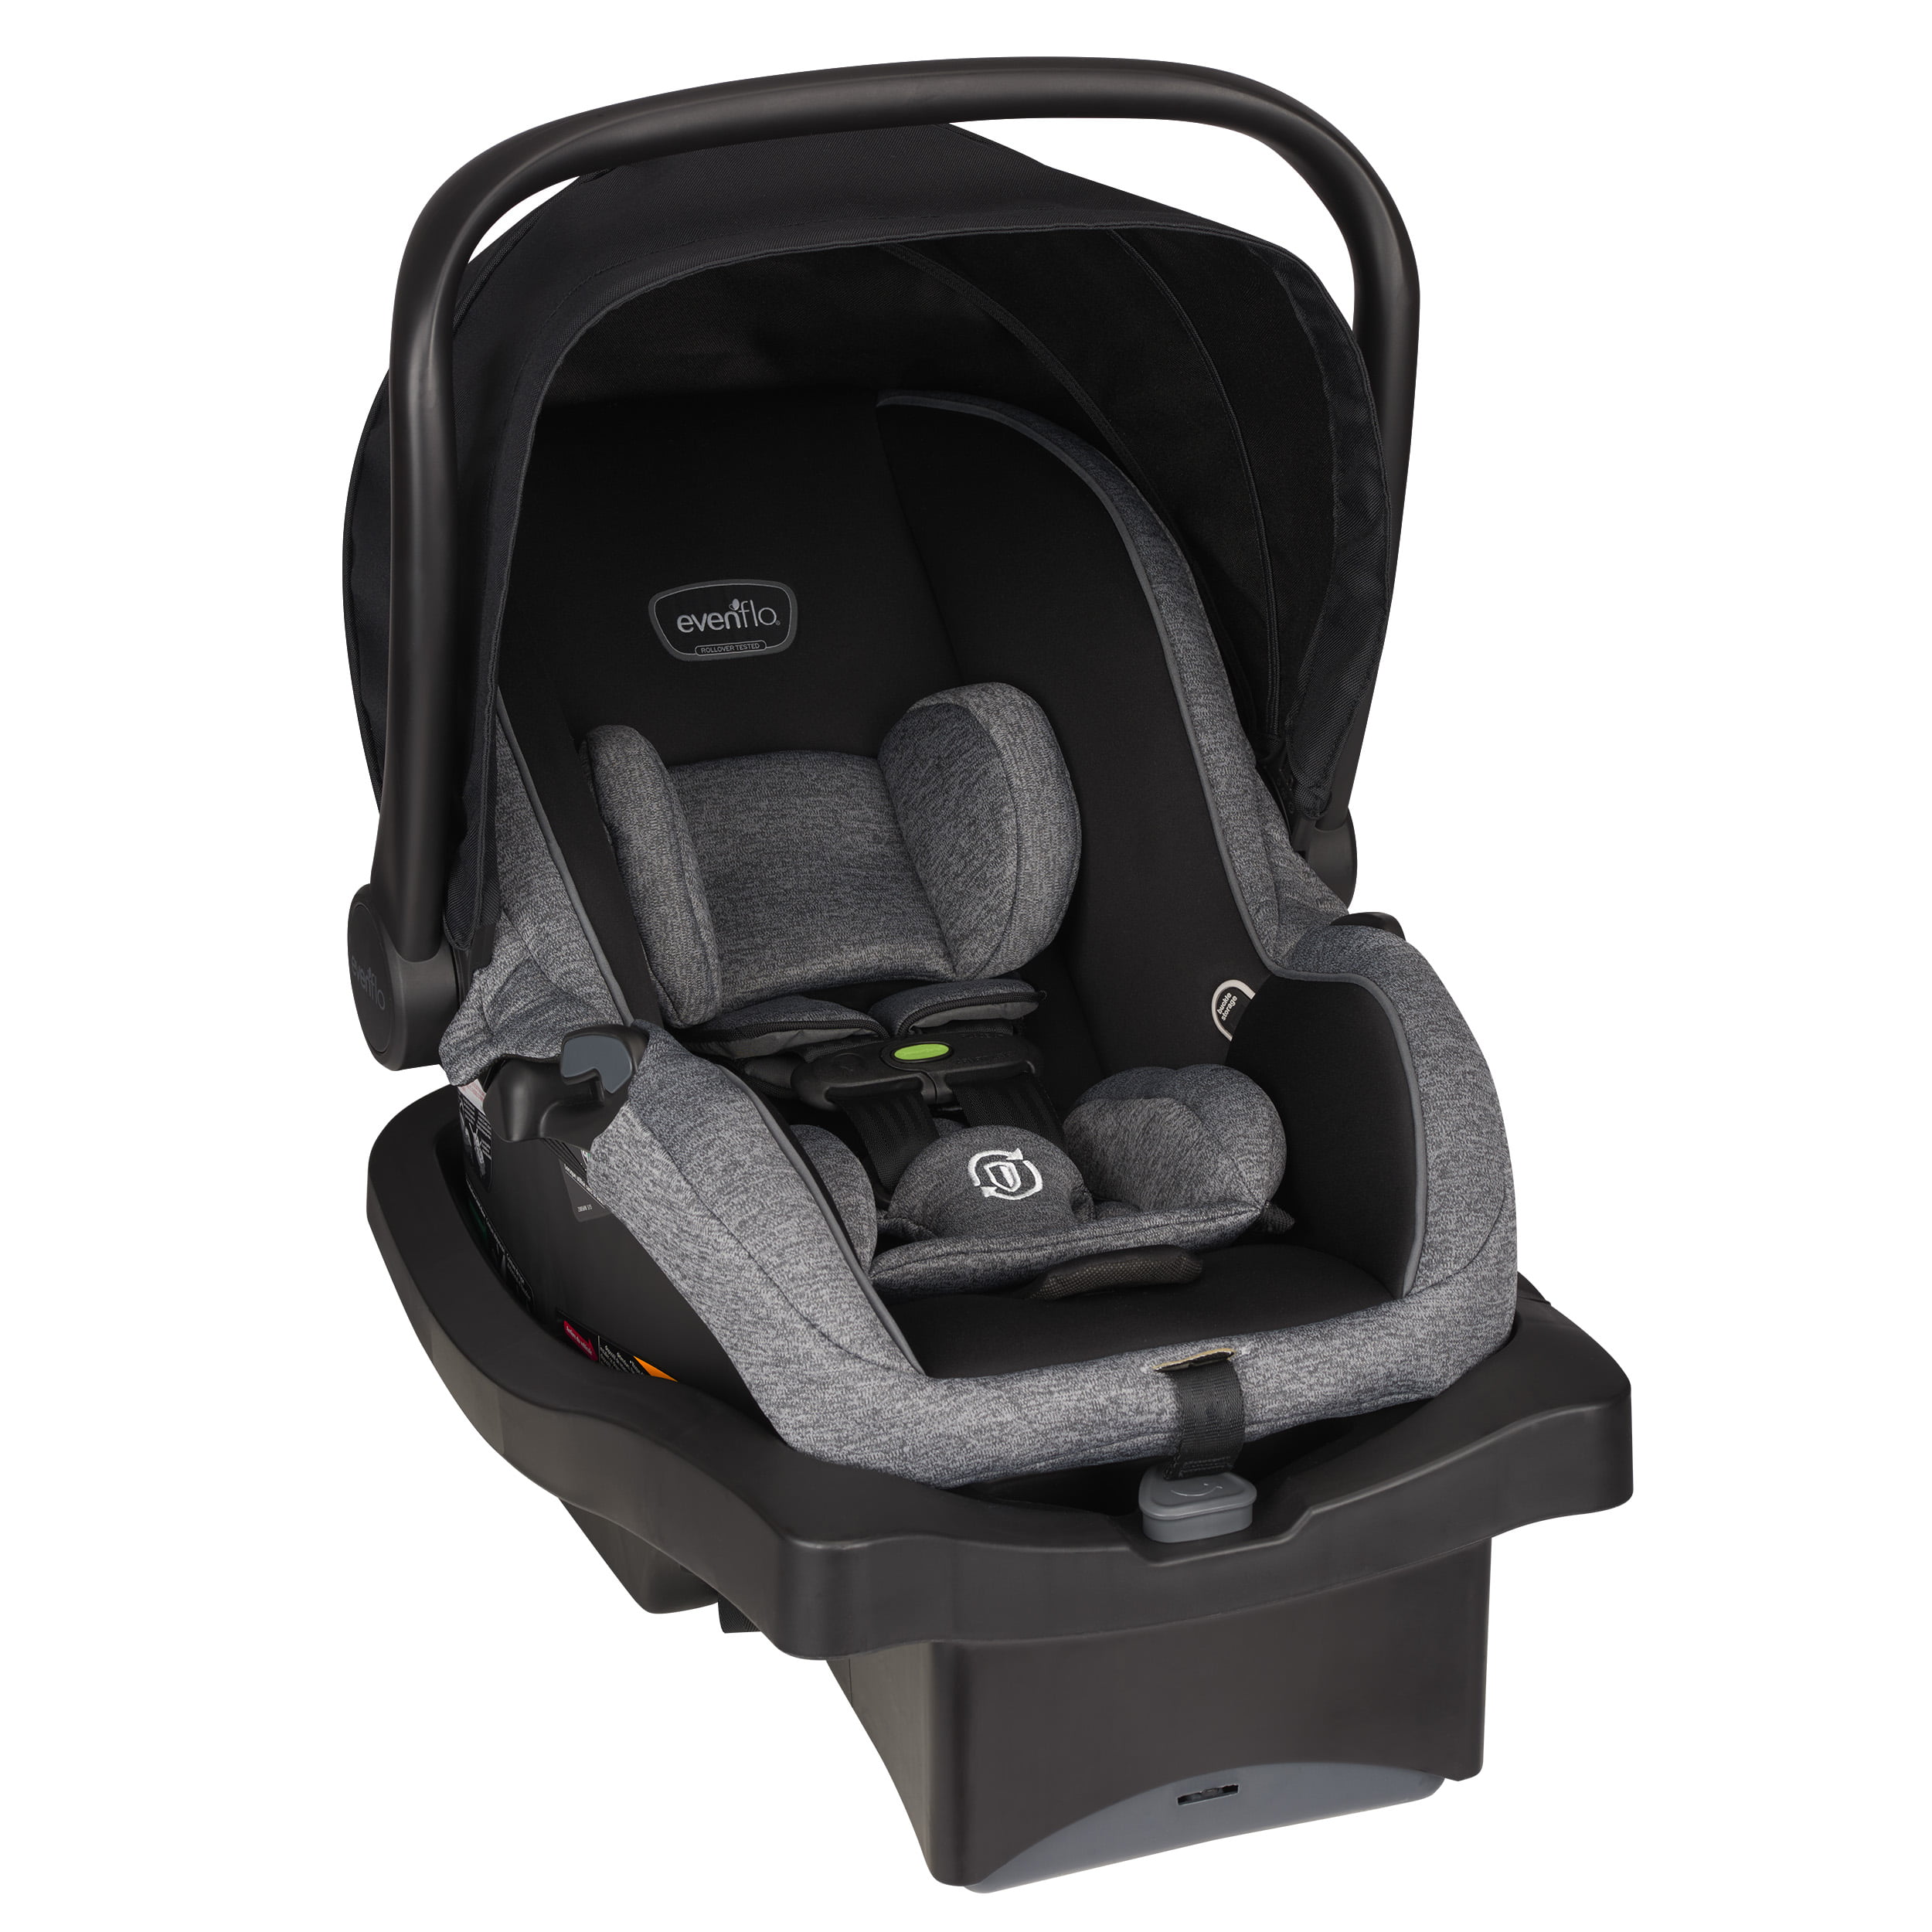 Evenflo Advanced Sensorsafe Litemax, How To Put Evenflo Infant Car Seat Cover Back On